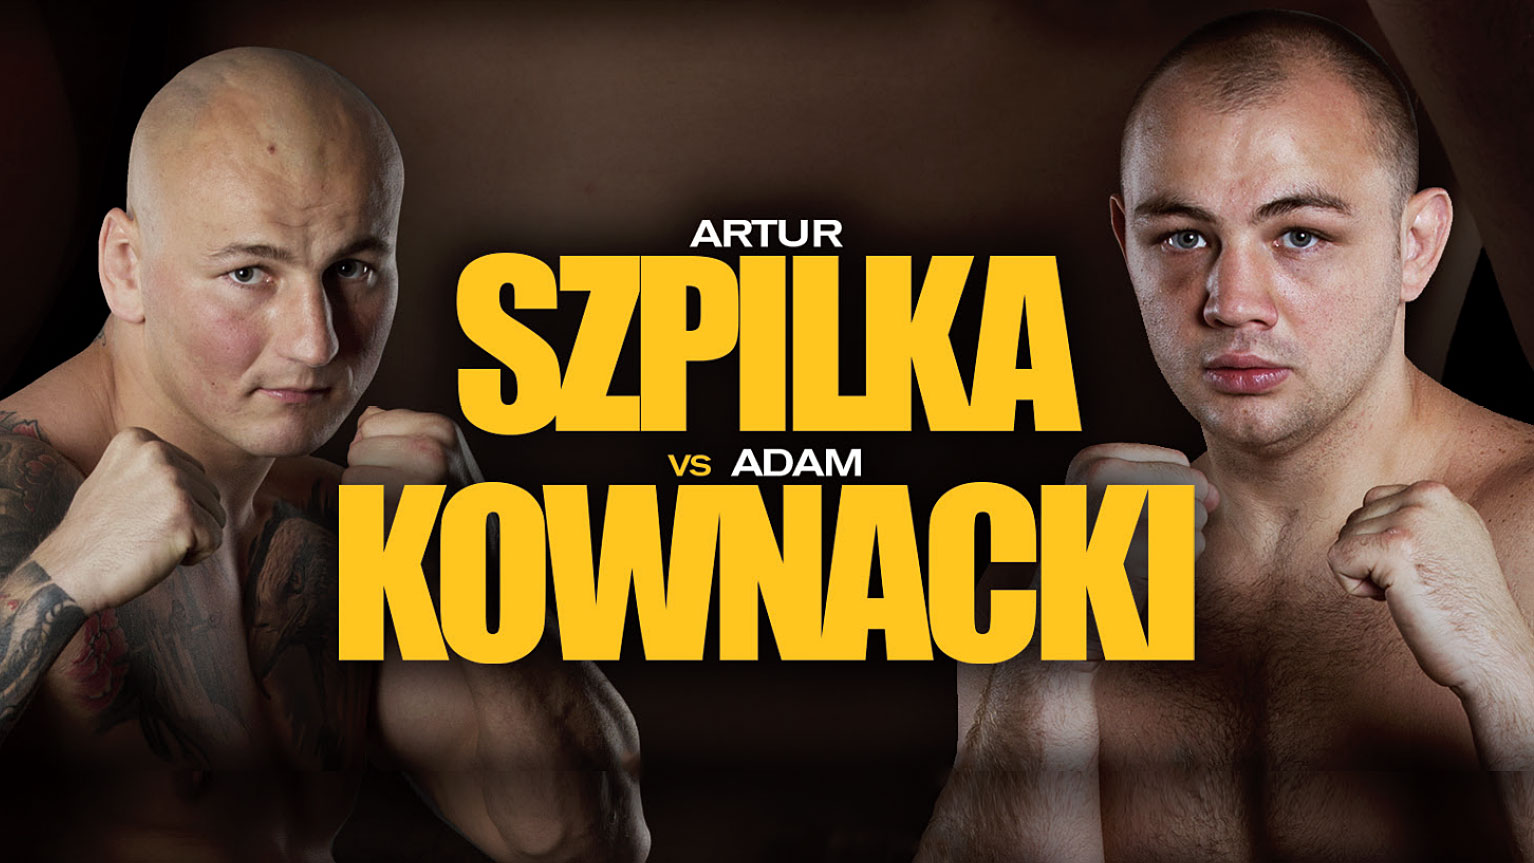 NY: Win Tickets for Artur Szpilka VS. Adam Kownacki - Facebook Giveaway